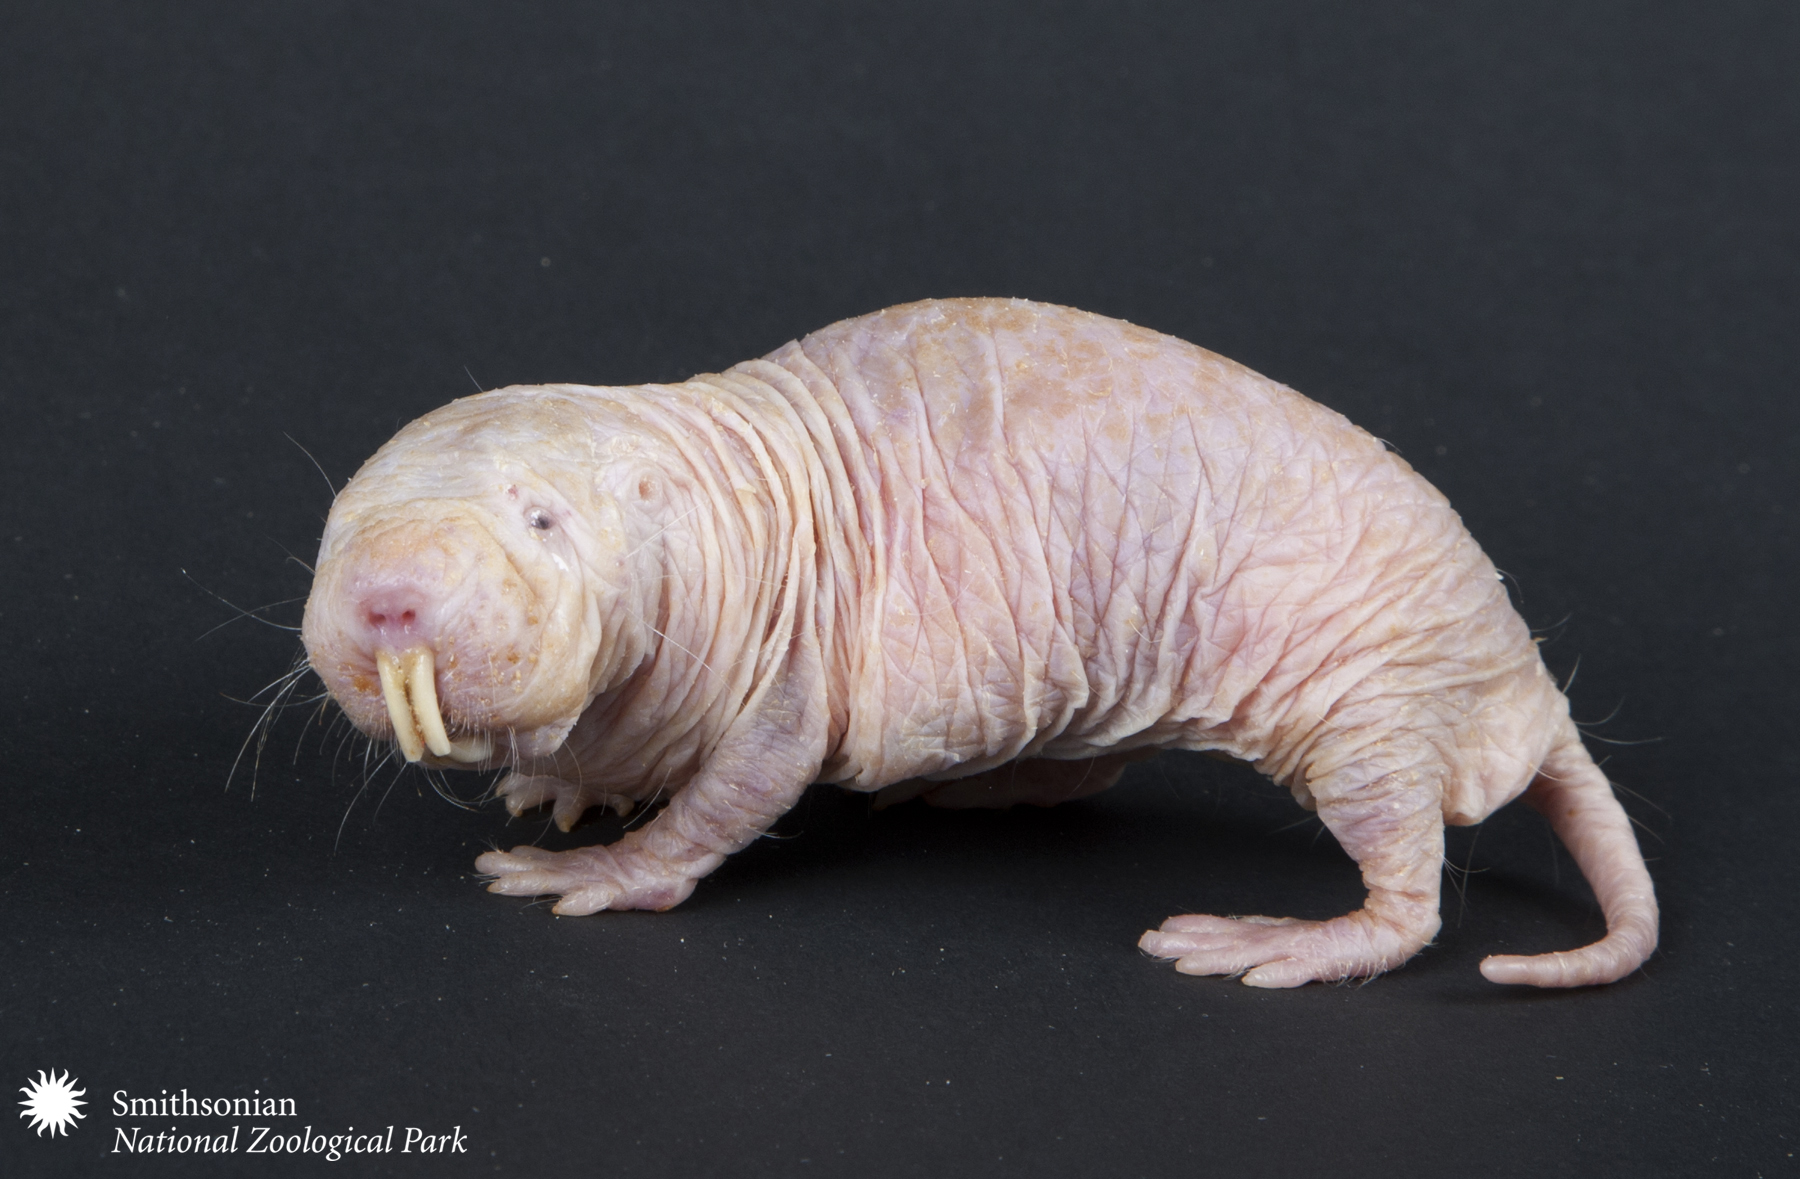 Meet the naked mole-rat